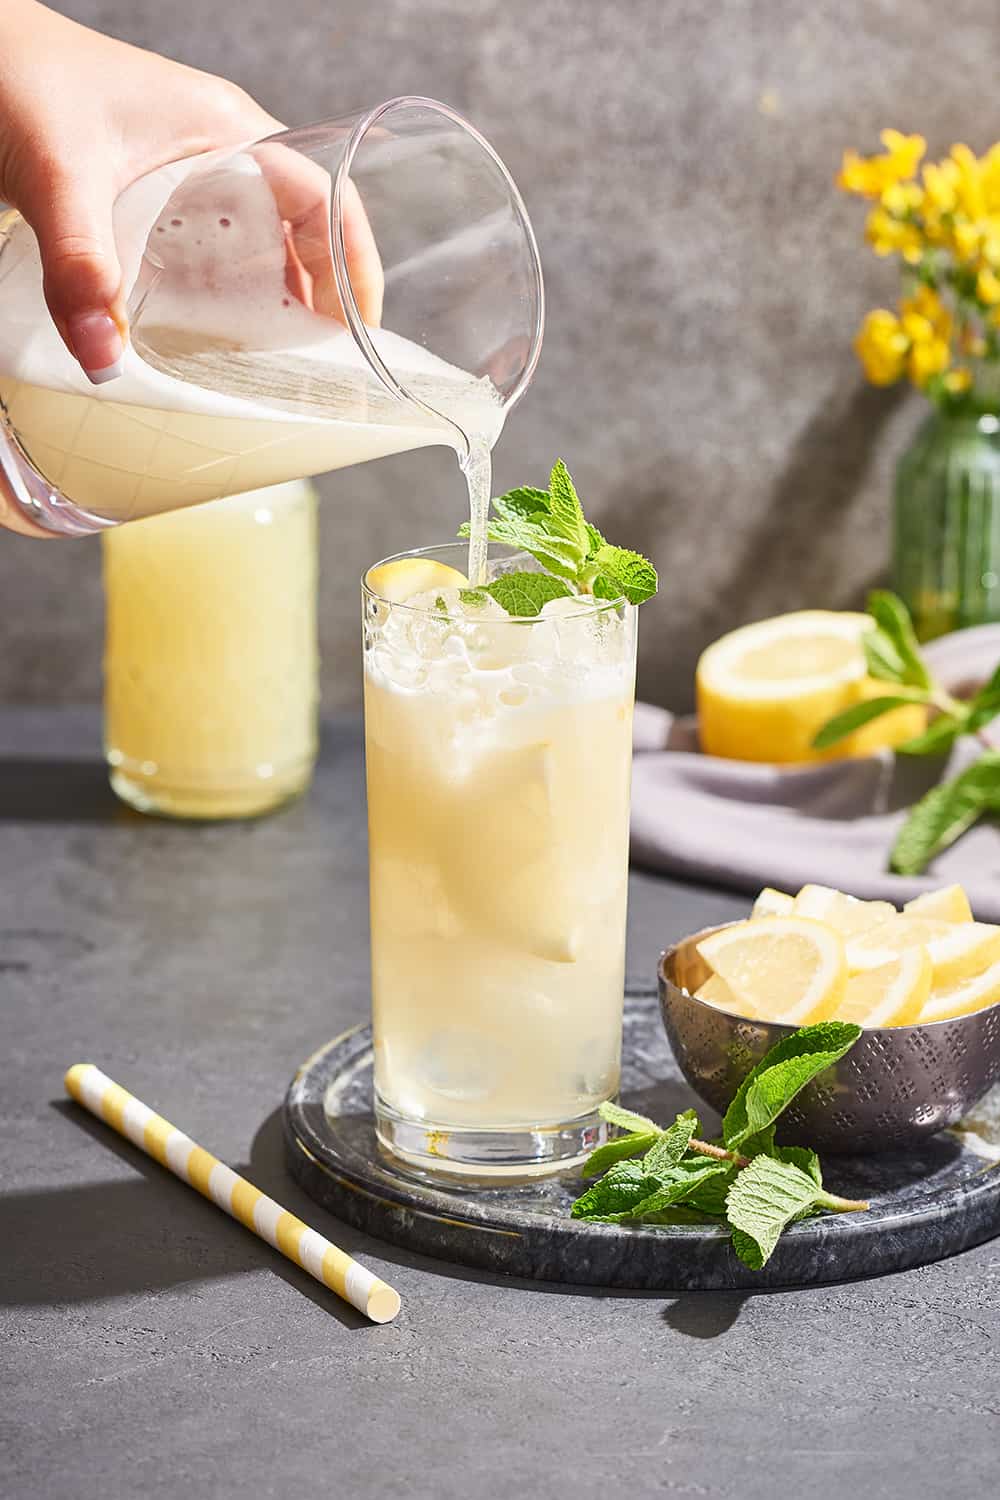 Make Lemonade from Scratch